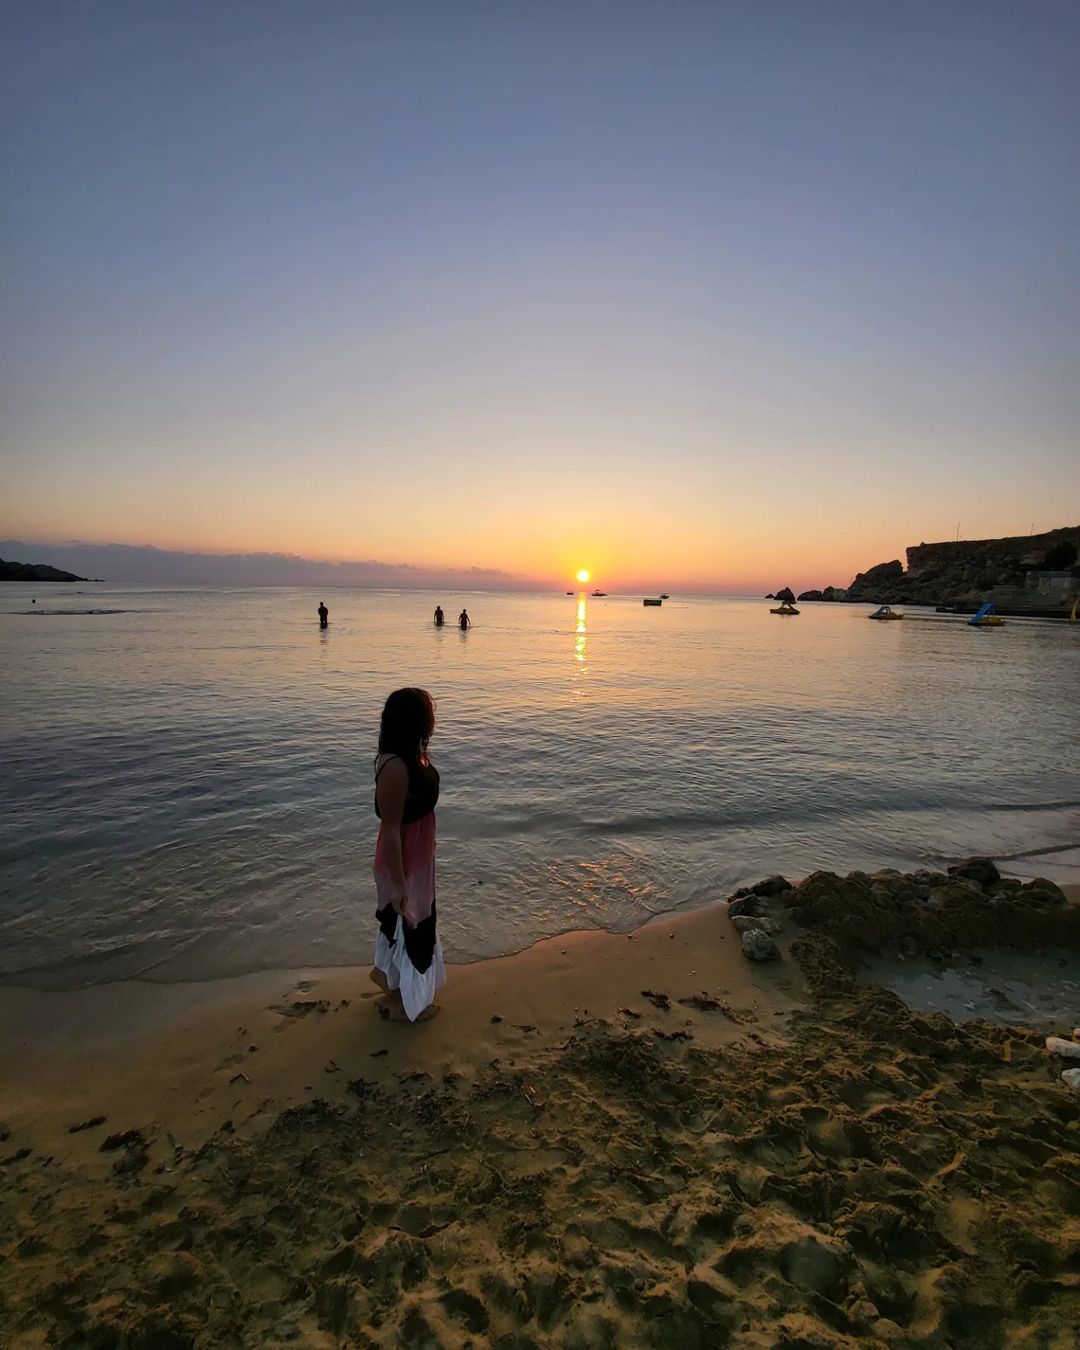 Golden Bay Beach, Malta - 15 Beautiful Tourist Attractions in Malta